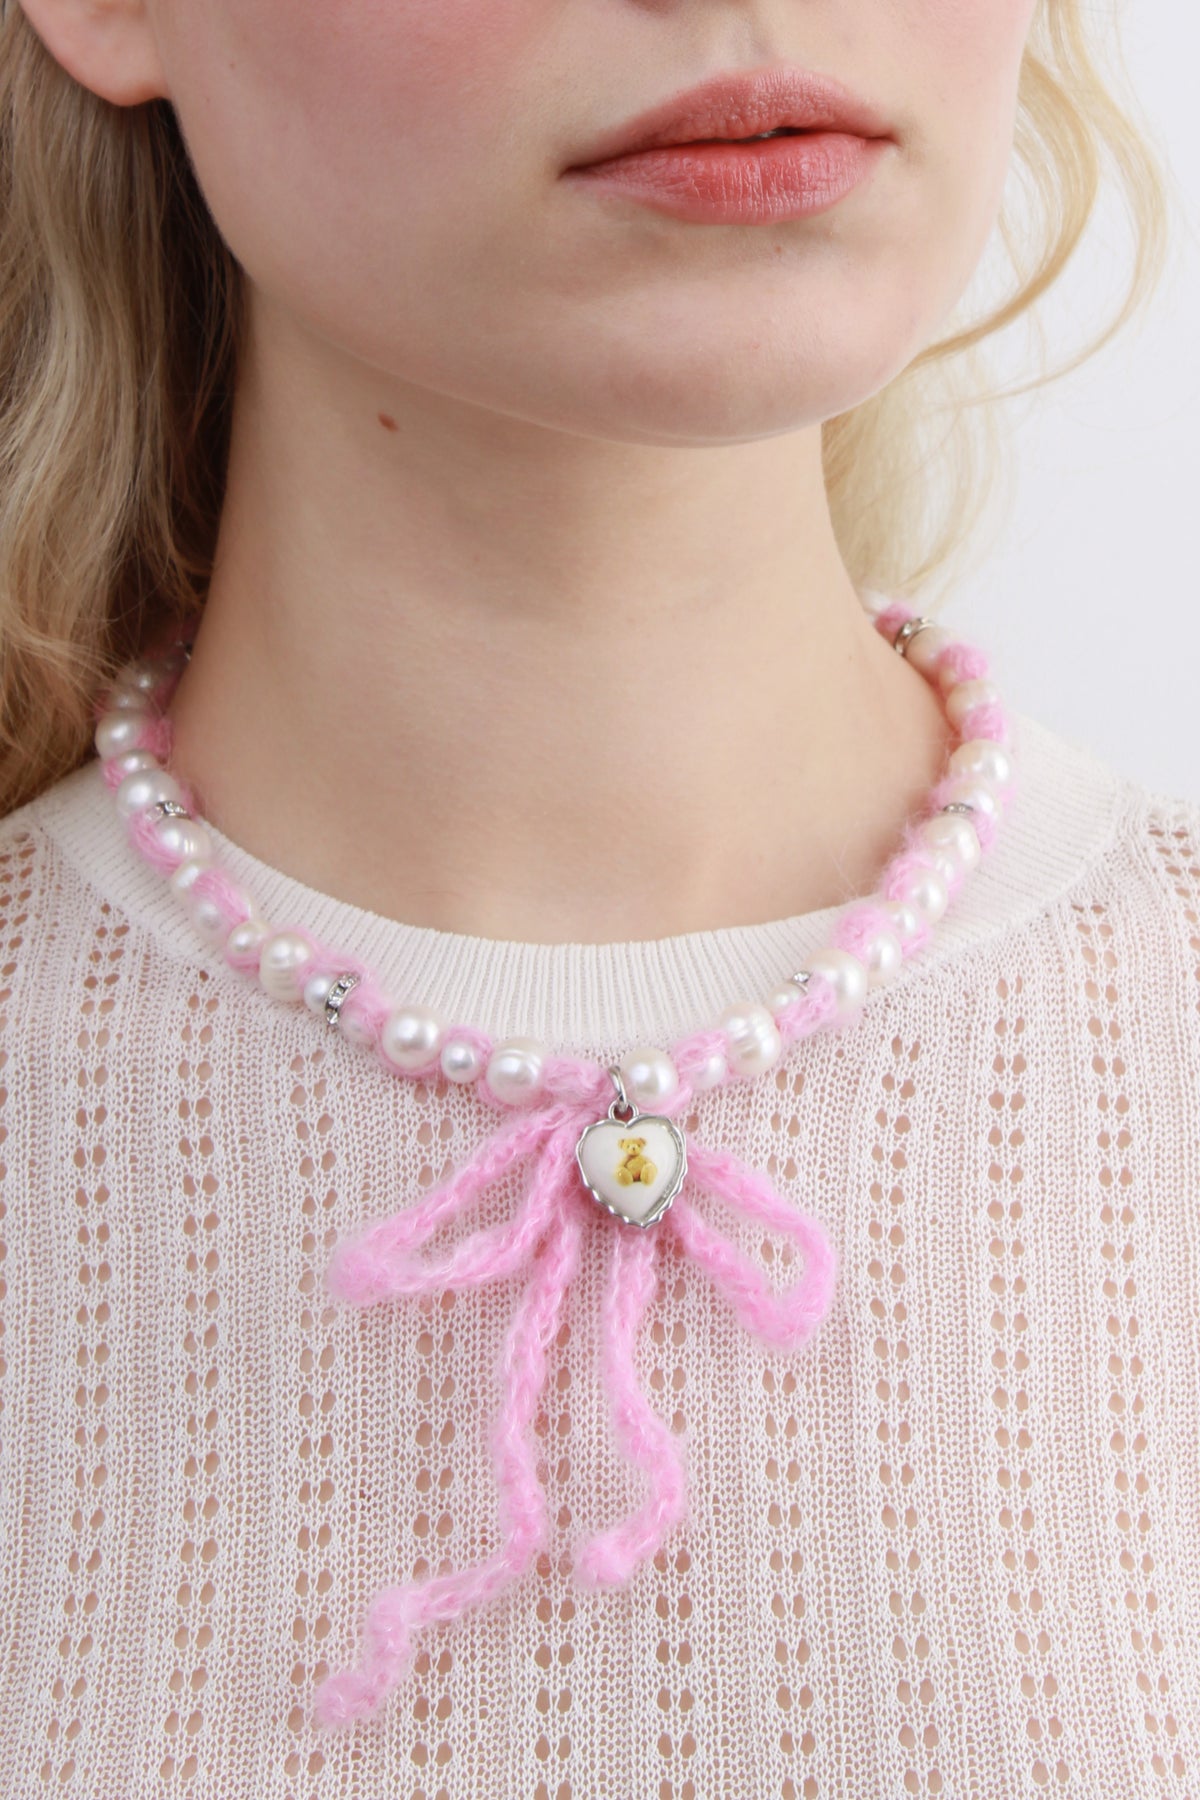 Crochet Blue Cashmere Pearls Necklace